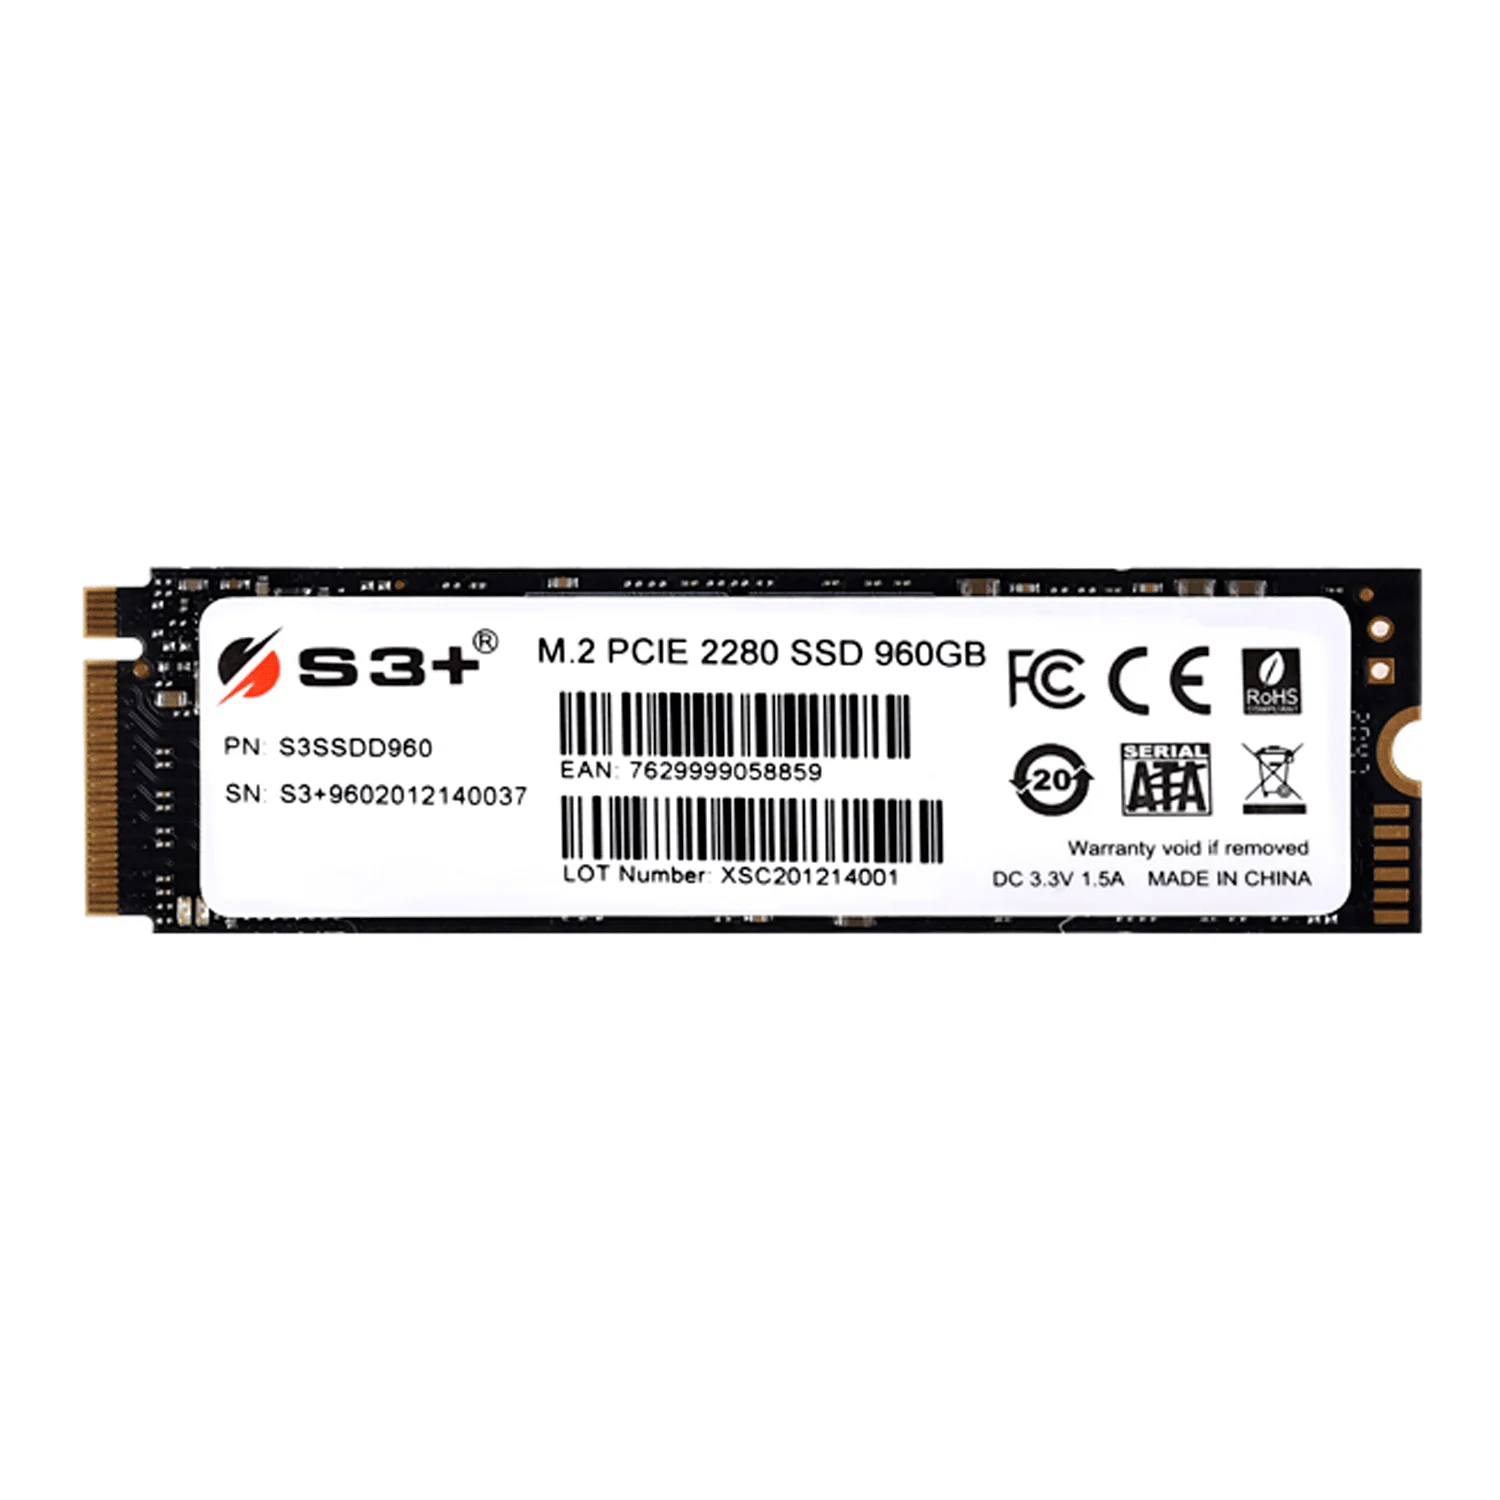 SSD M.2 S3+ 960GB / NVMe PCIe Gen3 - (S3SSDD960)